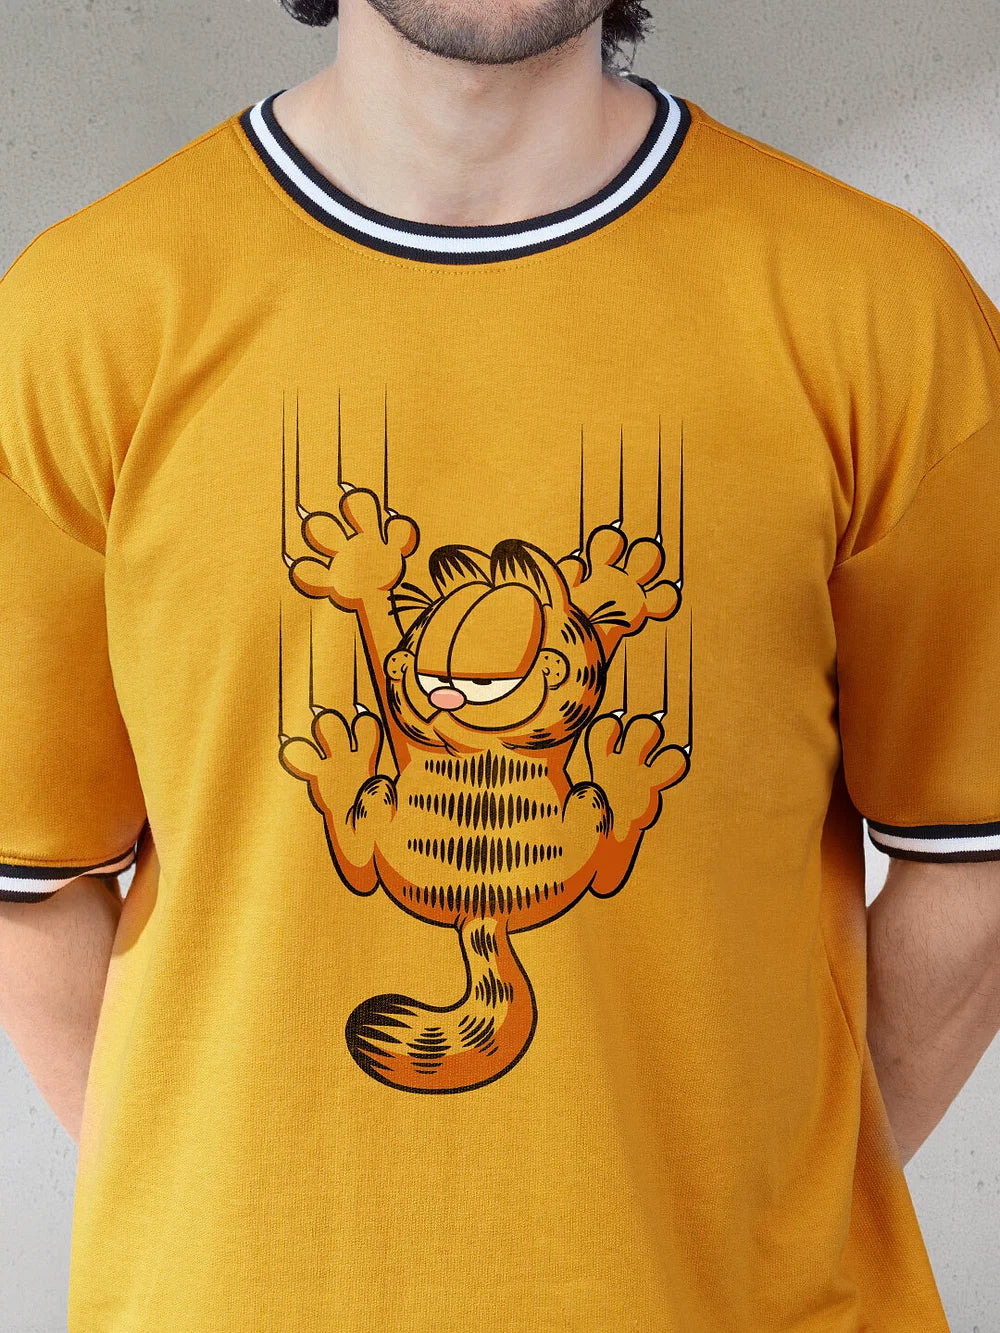 Garfield Clingy (UK version)